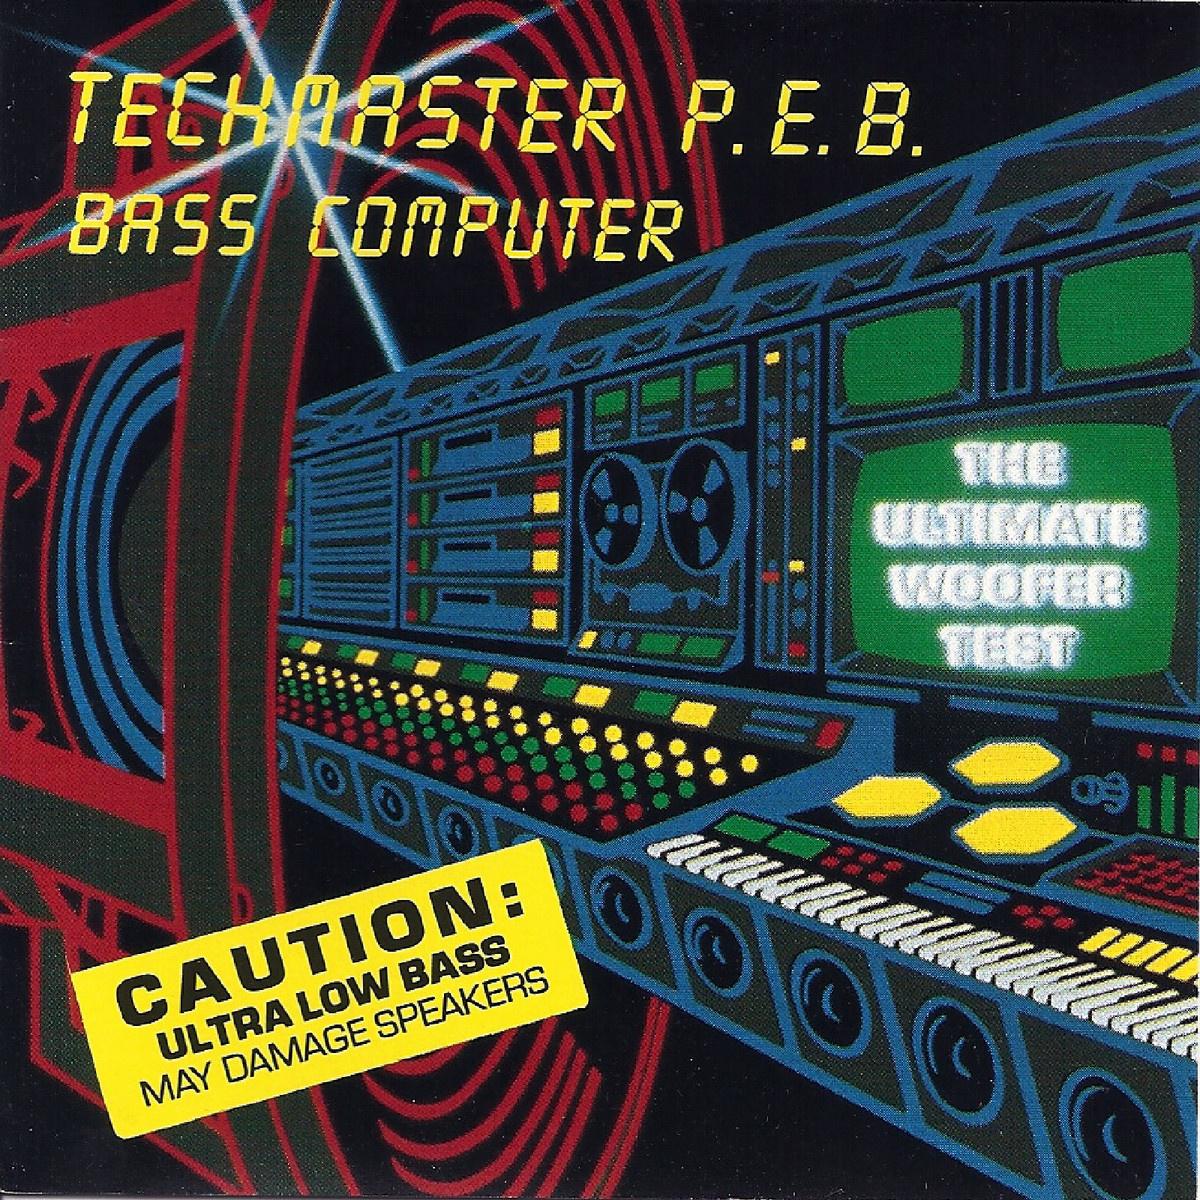 Techmaster P.E.B. - Time to Jam